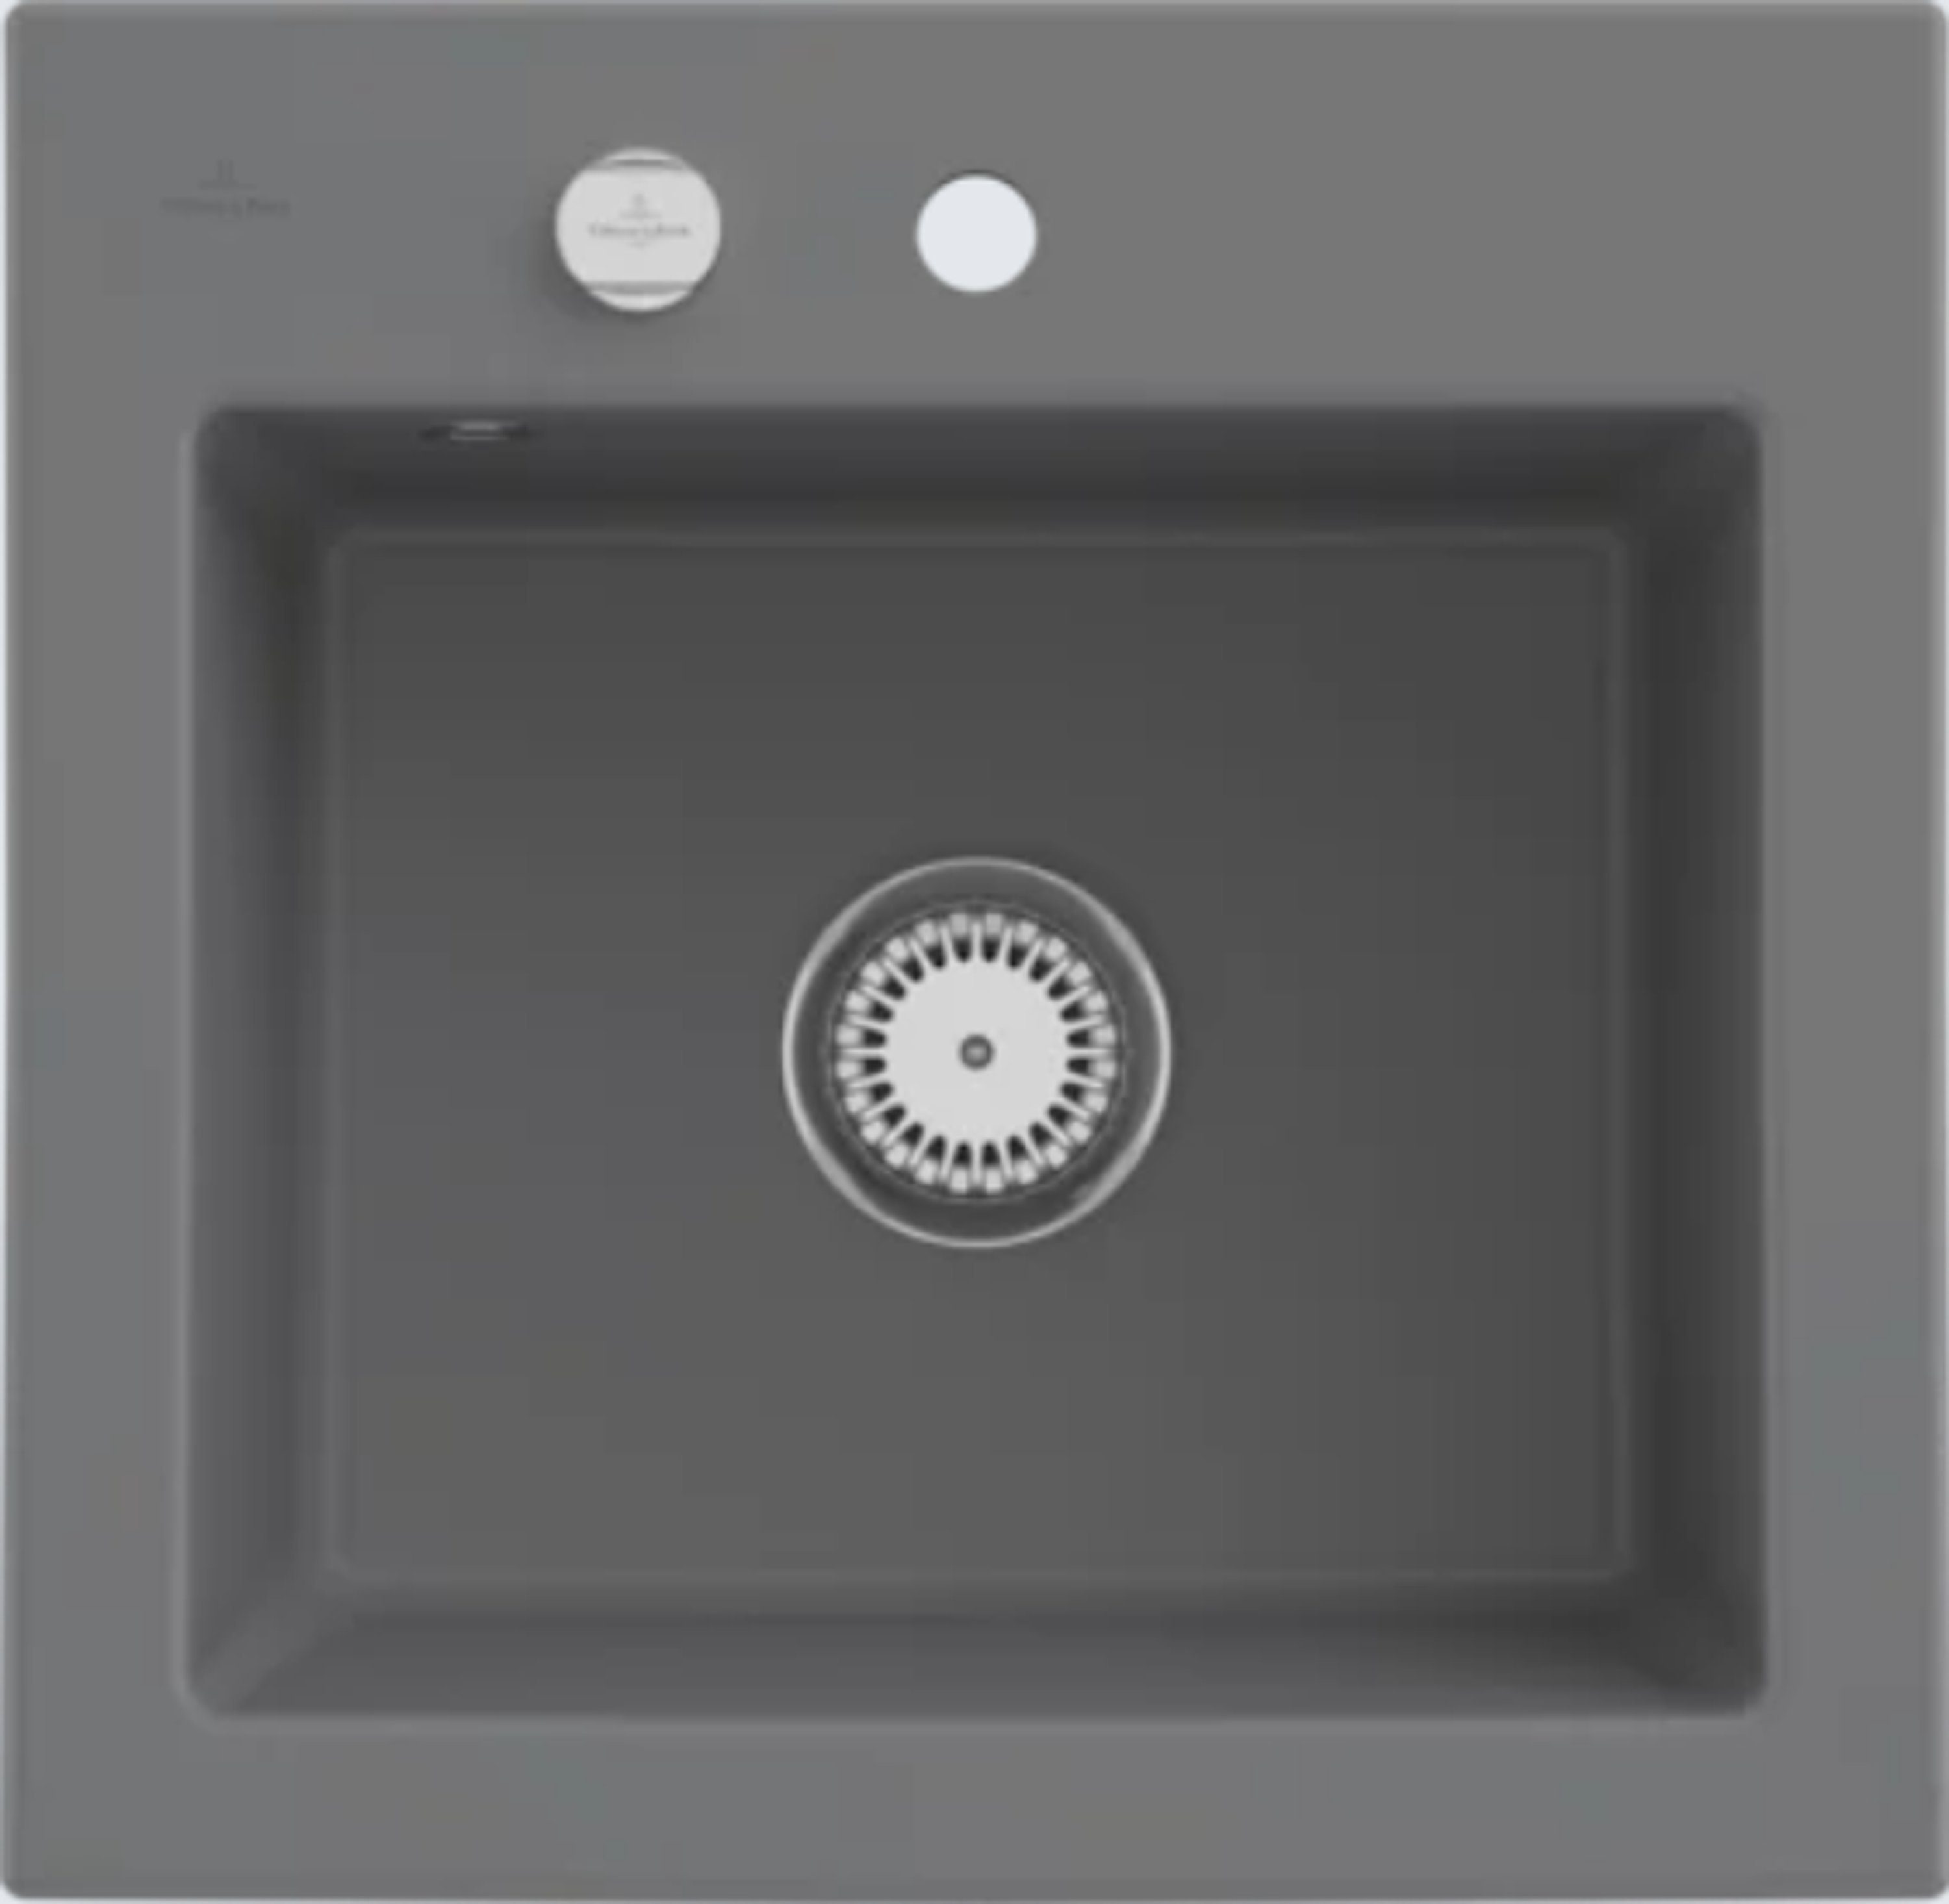 Villeroy & Boch Küchenspüle 3315 02 SL, Rechteckig, 52.5/22 cm, Subway Serie, Dampfgarschalen einsetzbar, Geschmacksmuster geschützt